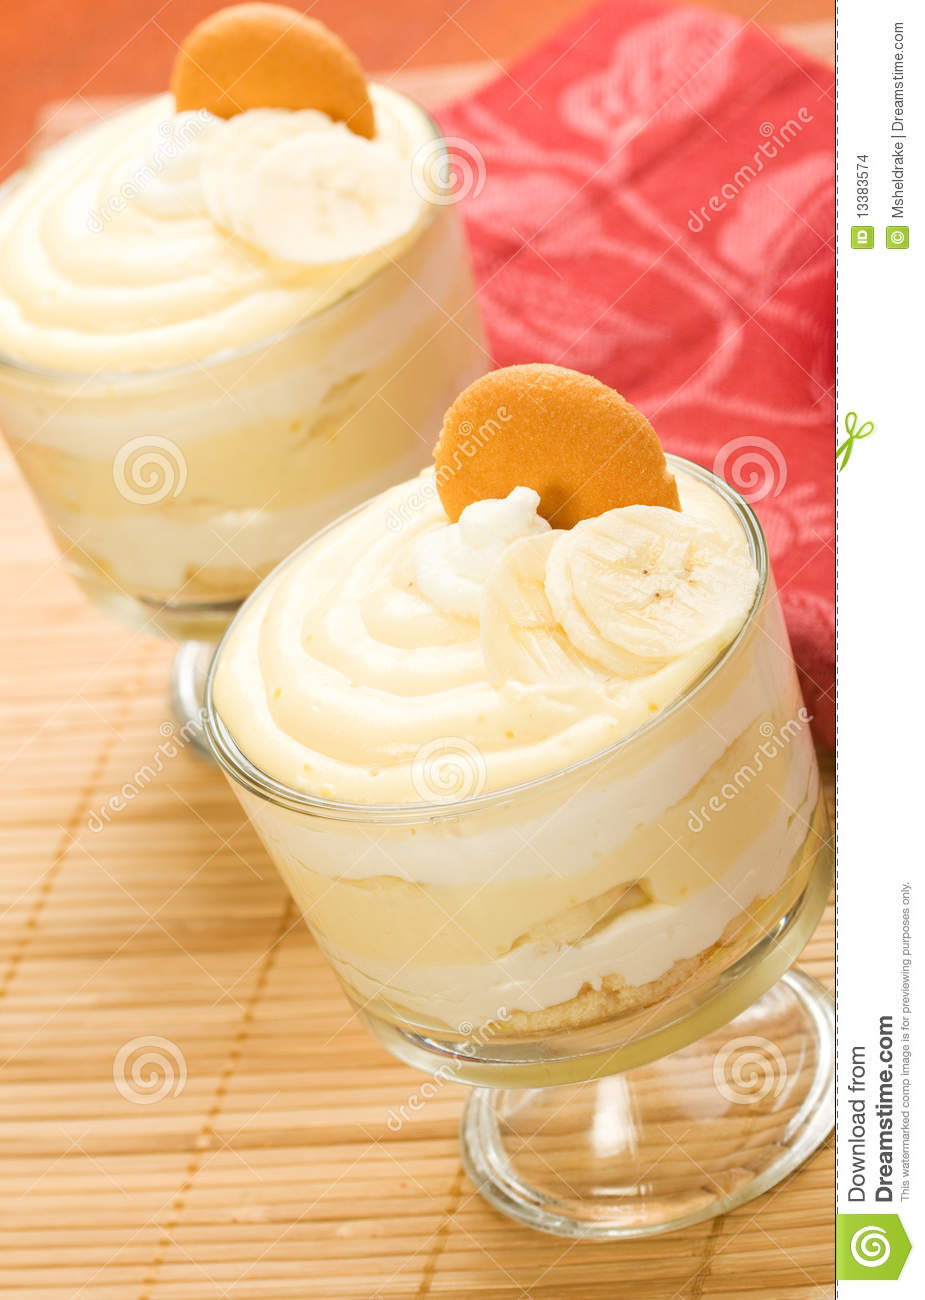 Banana Pudding Stock Images   Image  13383574